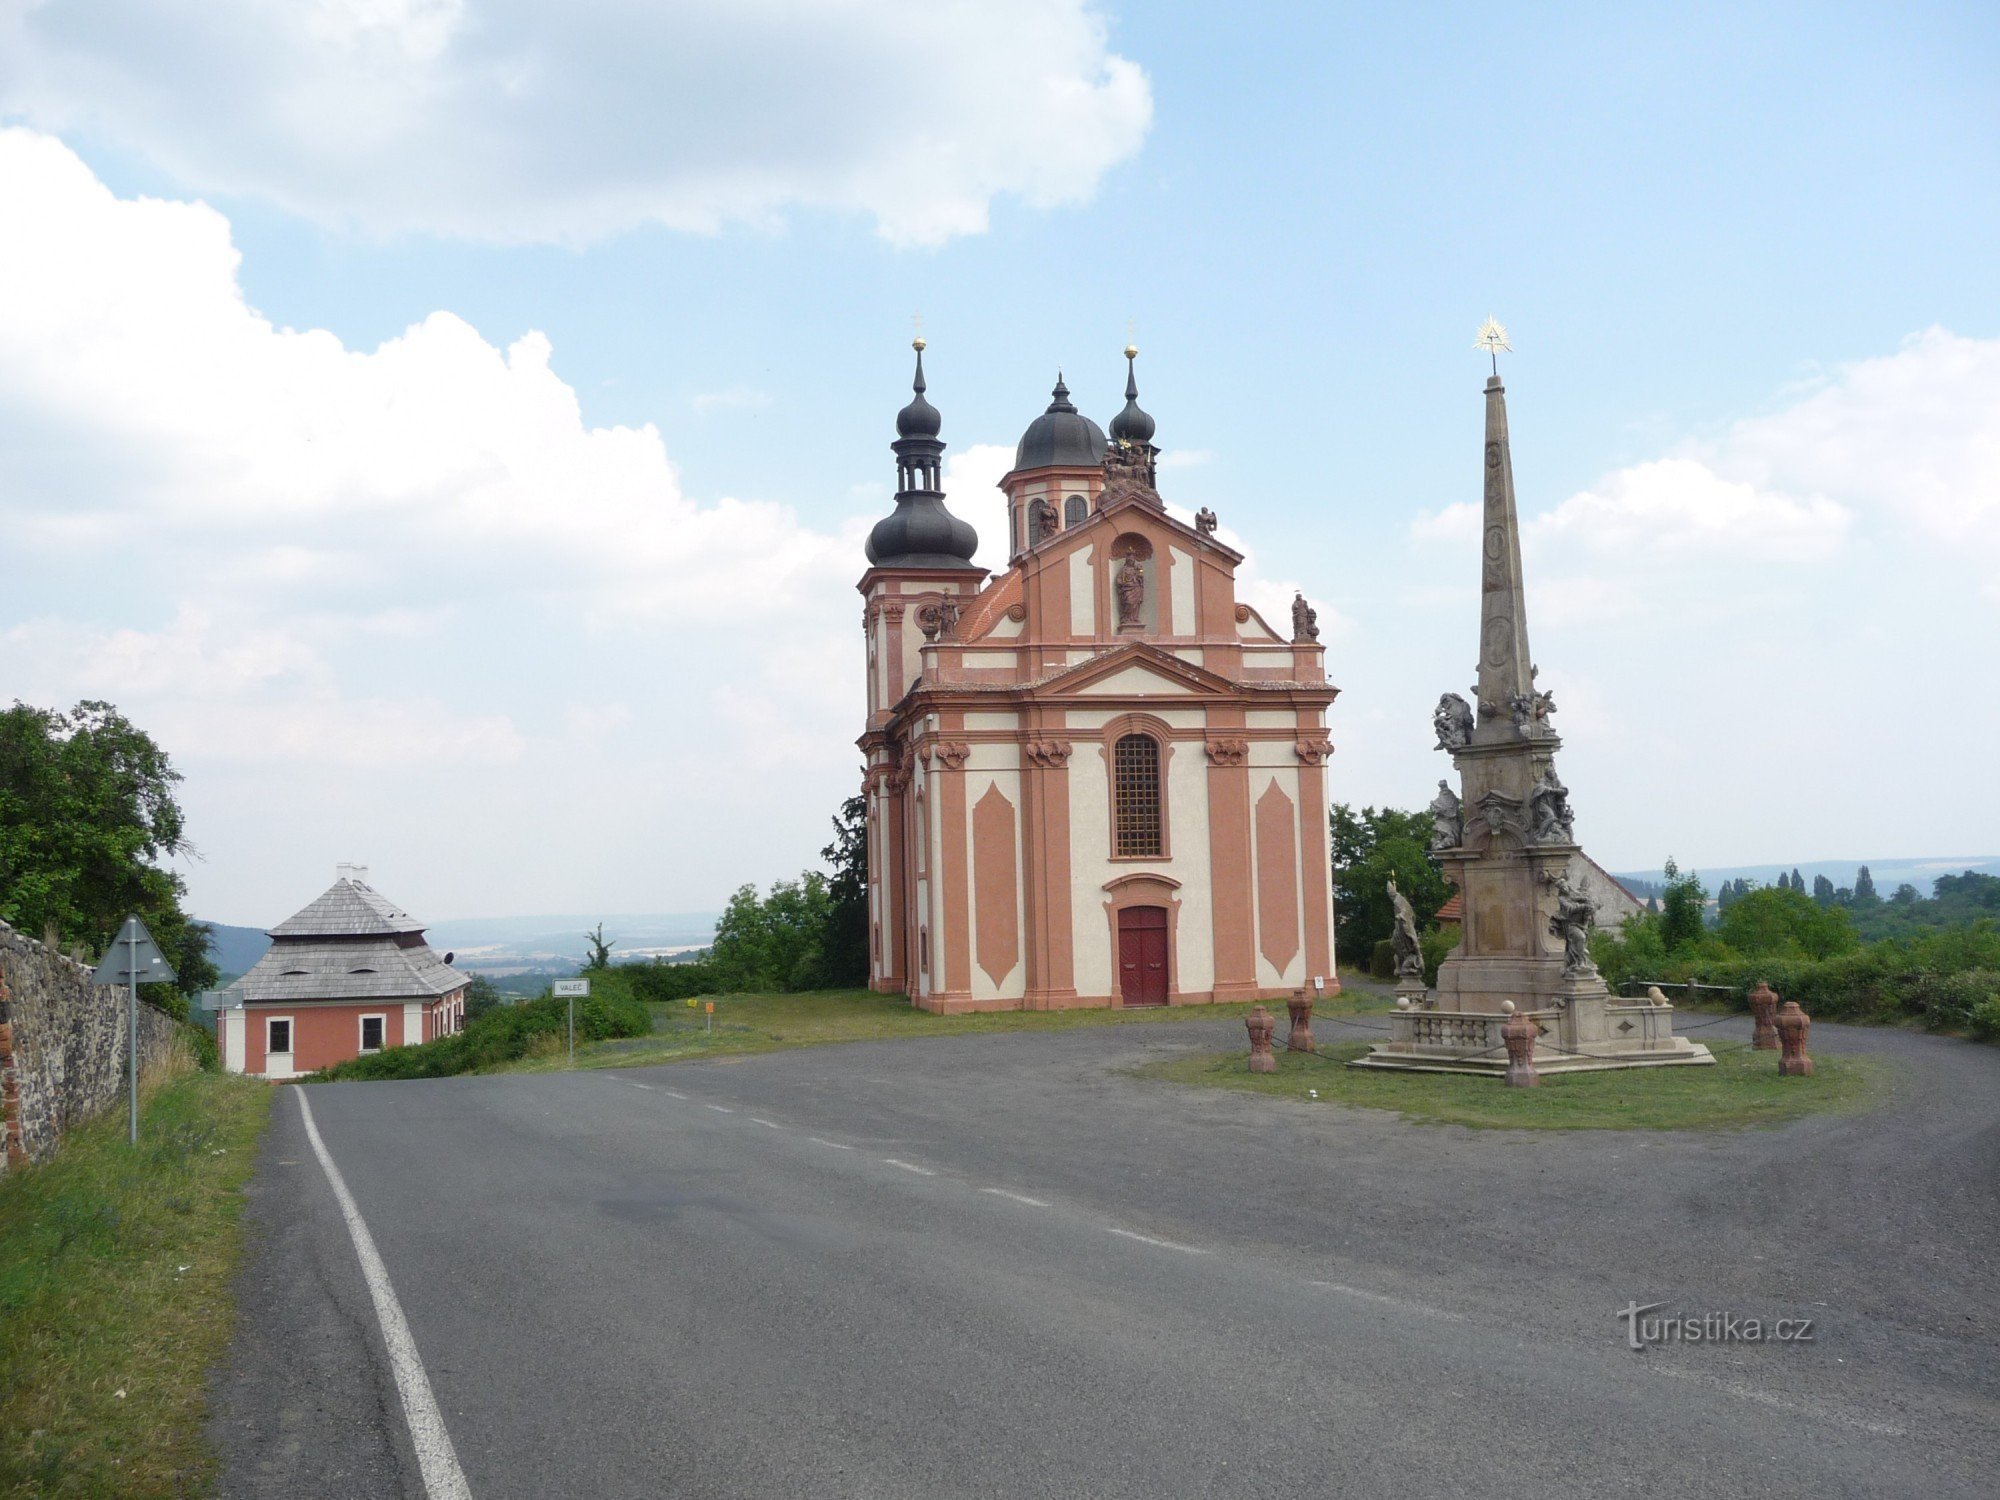 Church and column of the Holy Trinity